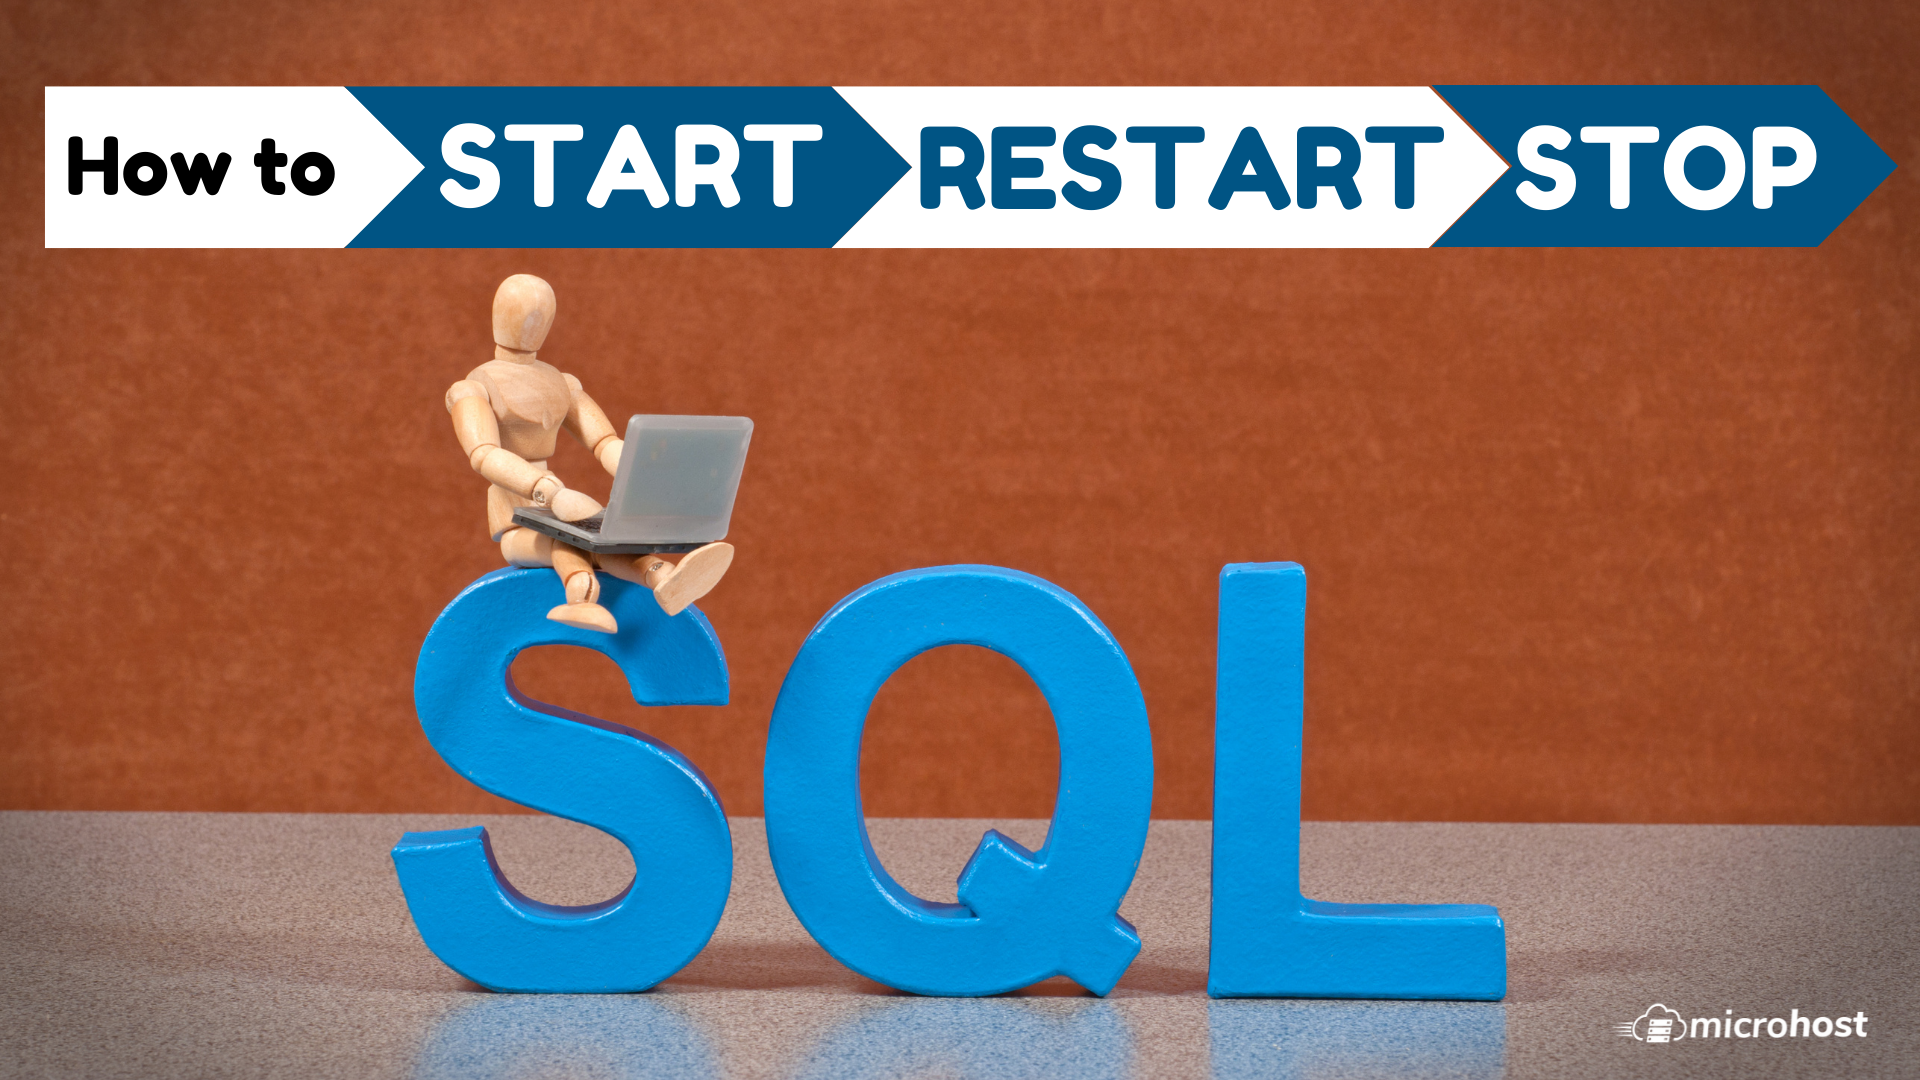 How to Start, Stop, and Restart MySQL Server on centos 7